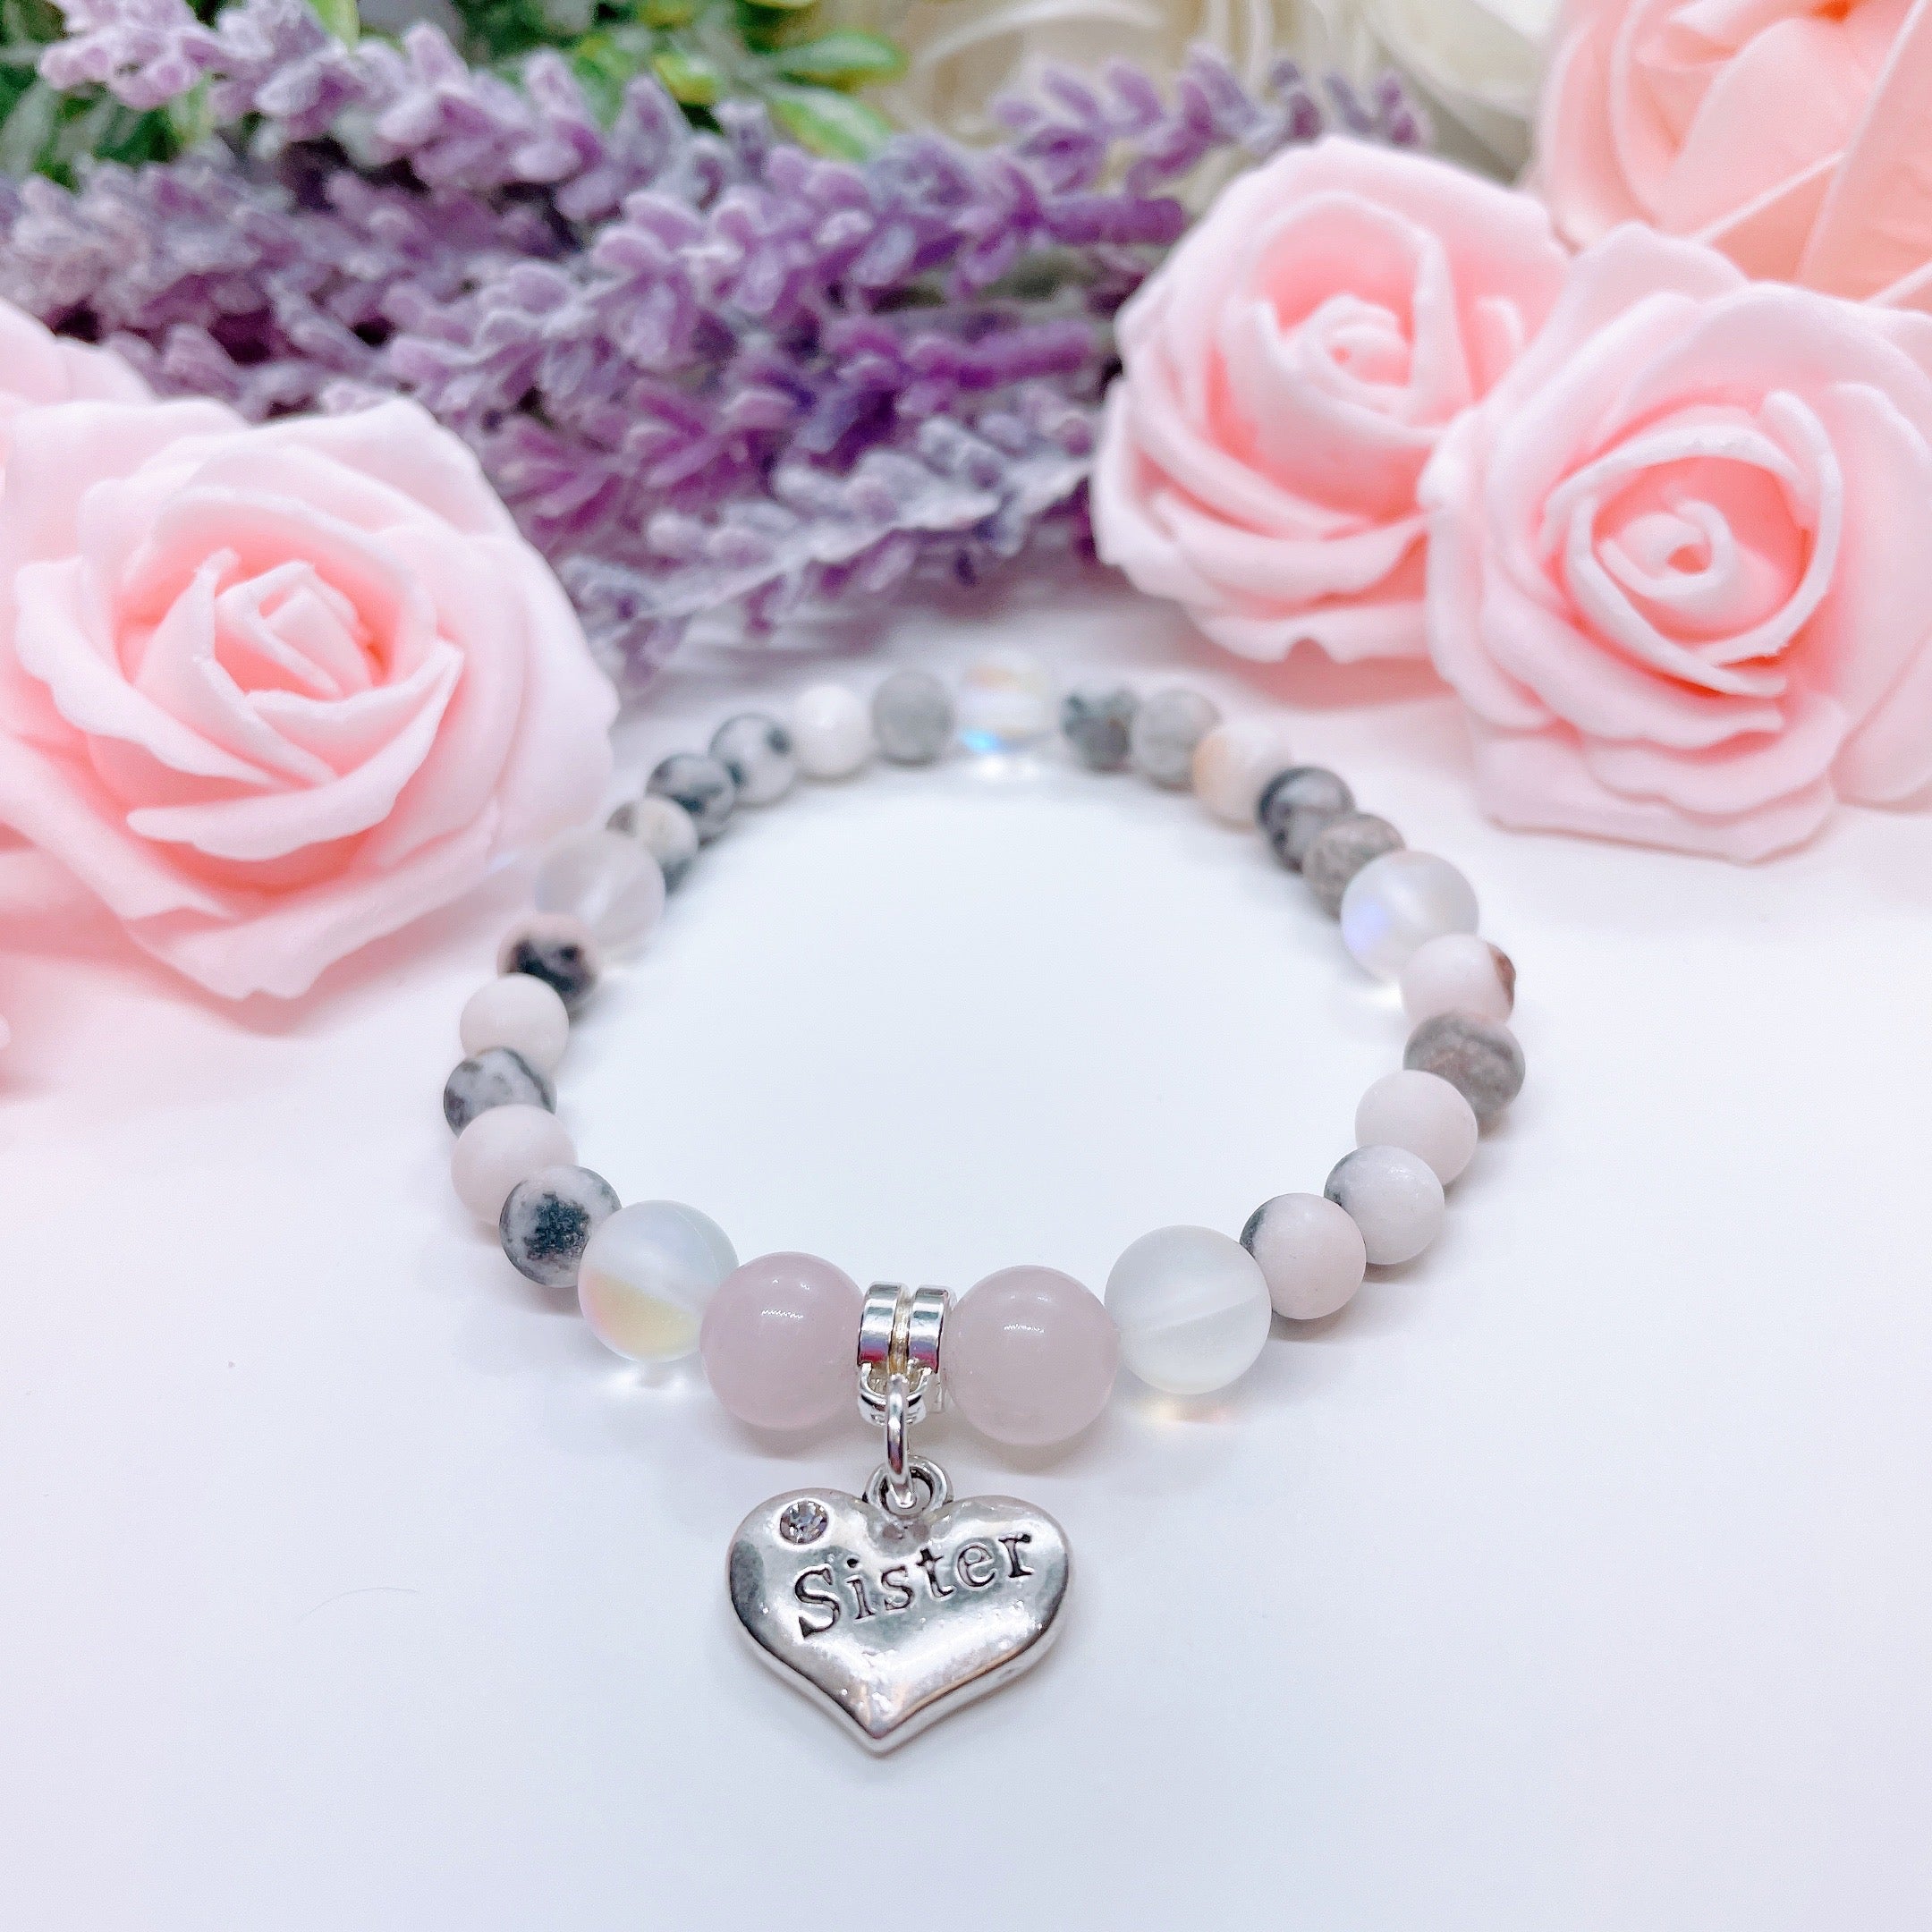 Sister Heart Companion Charm Bracelet Rose Quartz